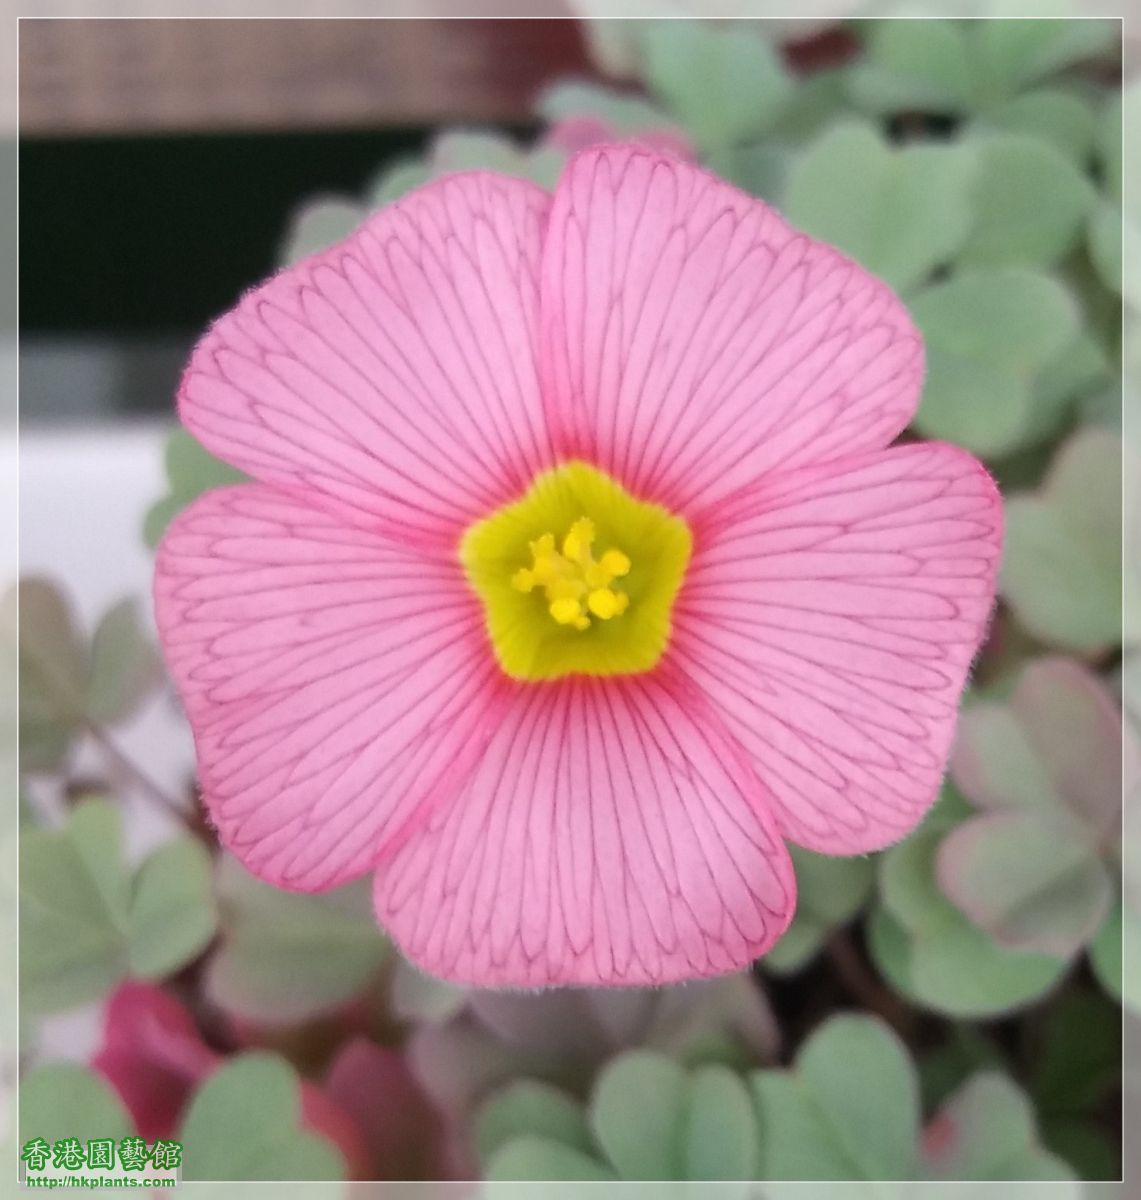 Oxalis Obtusa Rose-2019-005.jpg